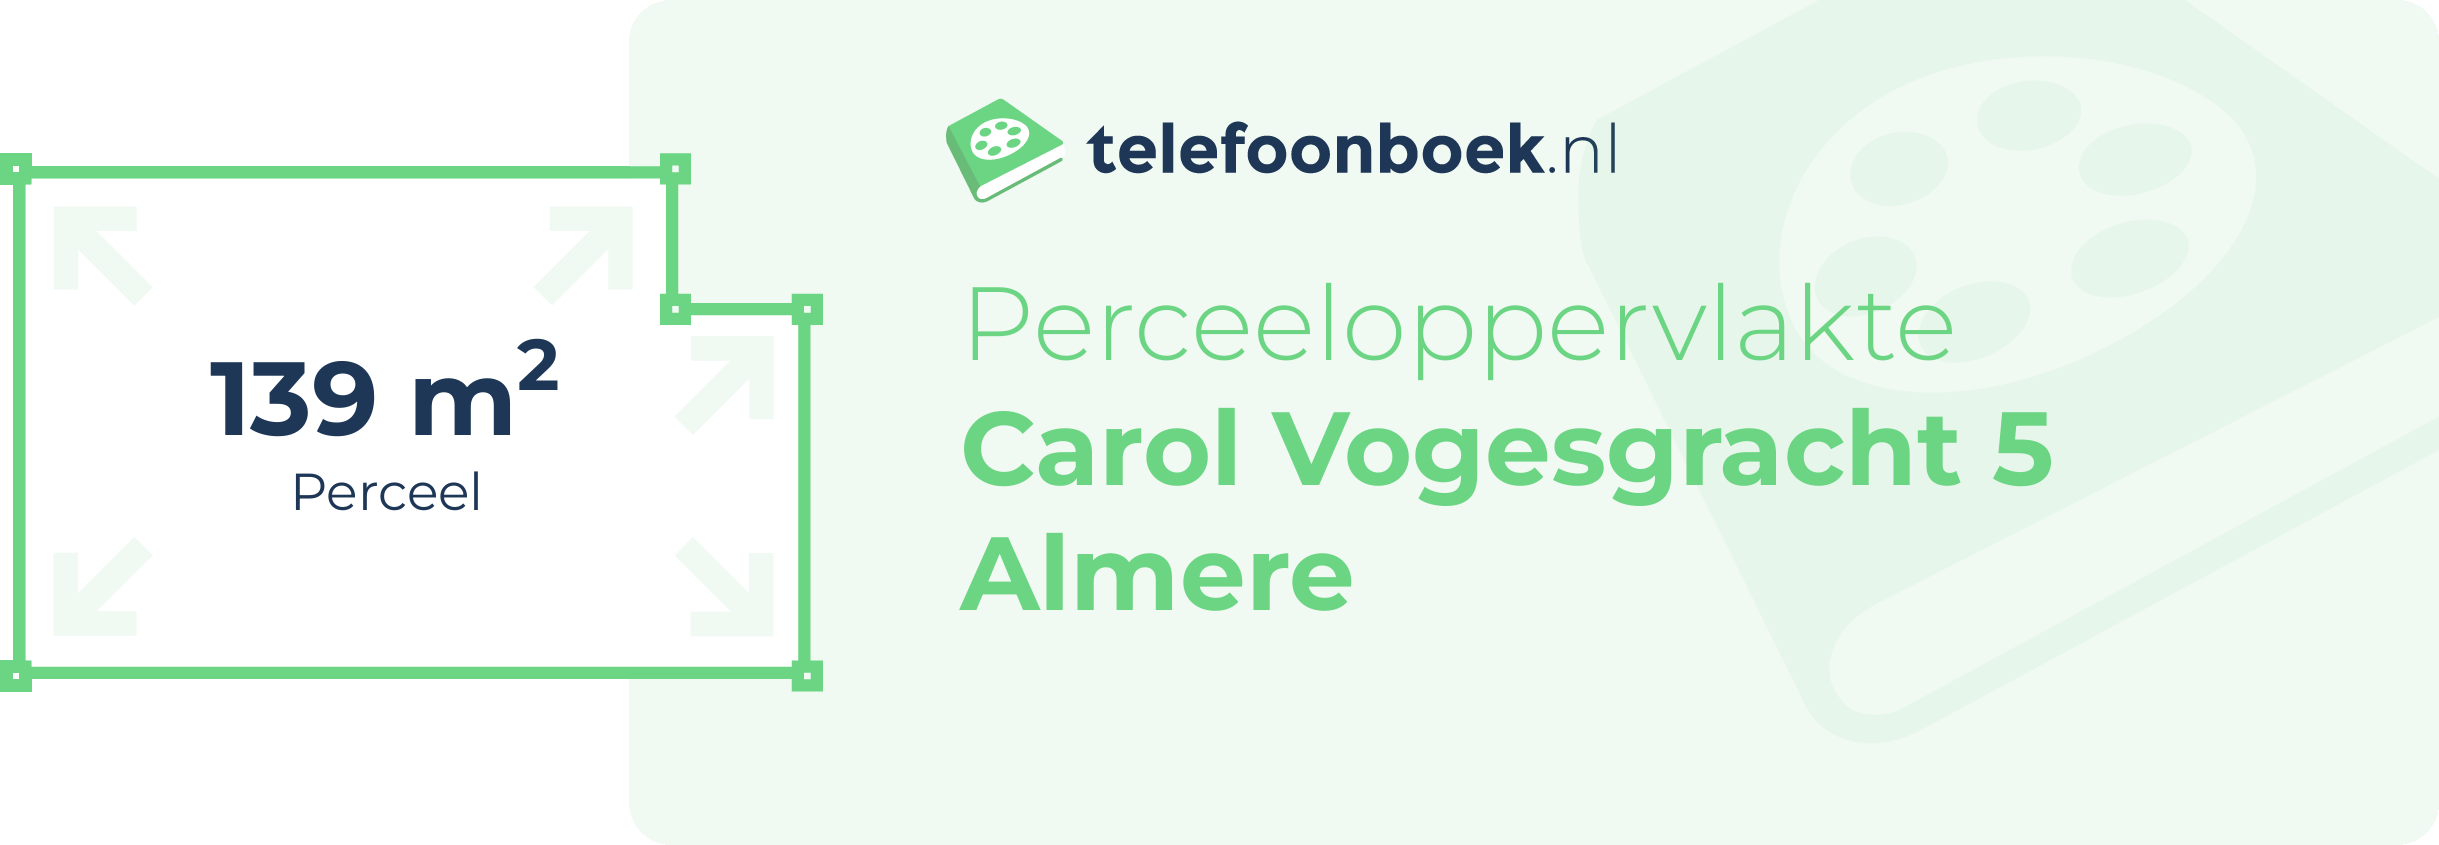 Perceeloppervlakte Carol Vogesgracht 5 Almere